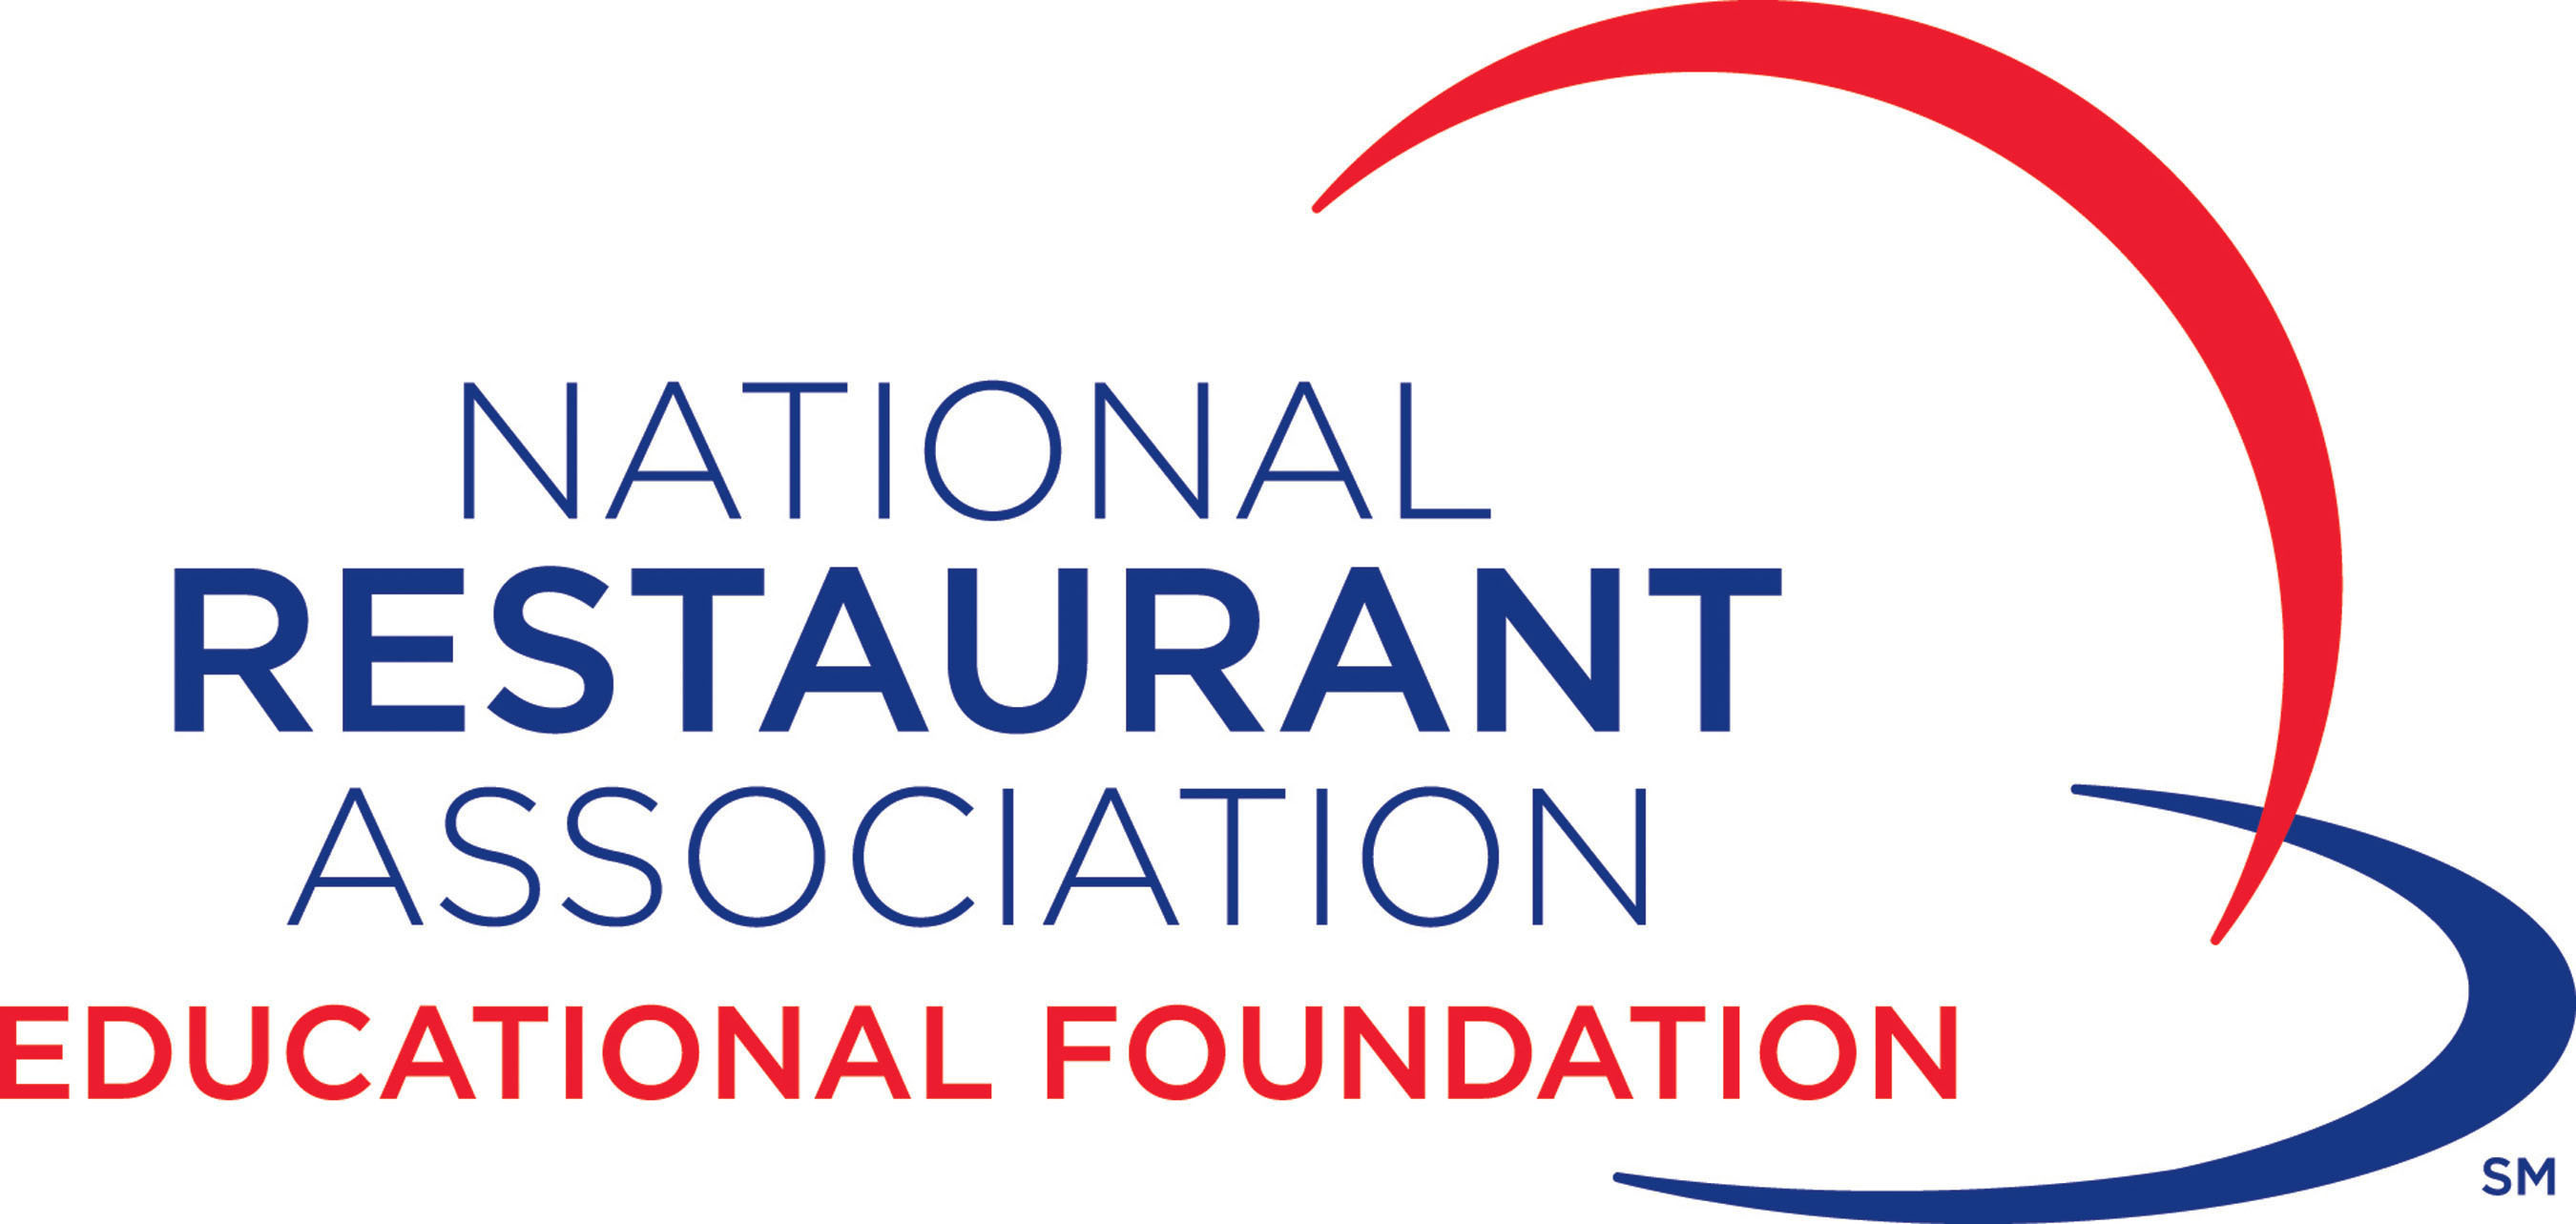 National Restaurant Association Educational Foundation Logo. (PRNewsFoto/National Restaurant Association Educational Foundation)